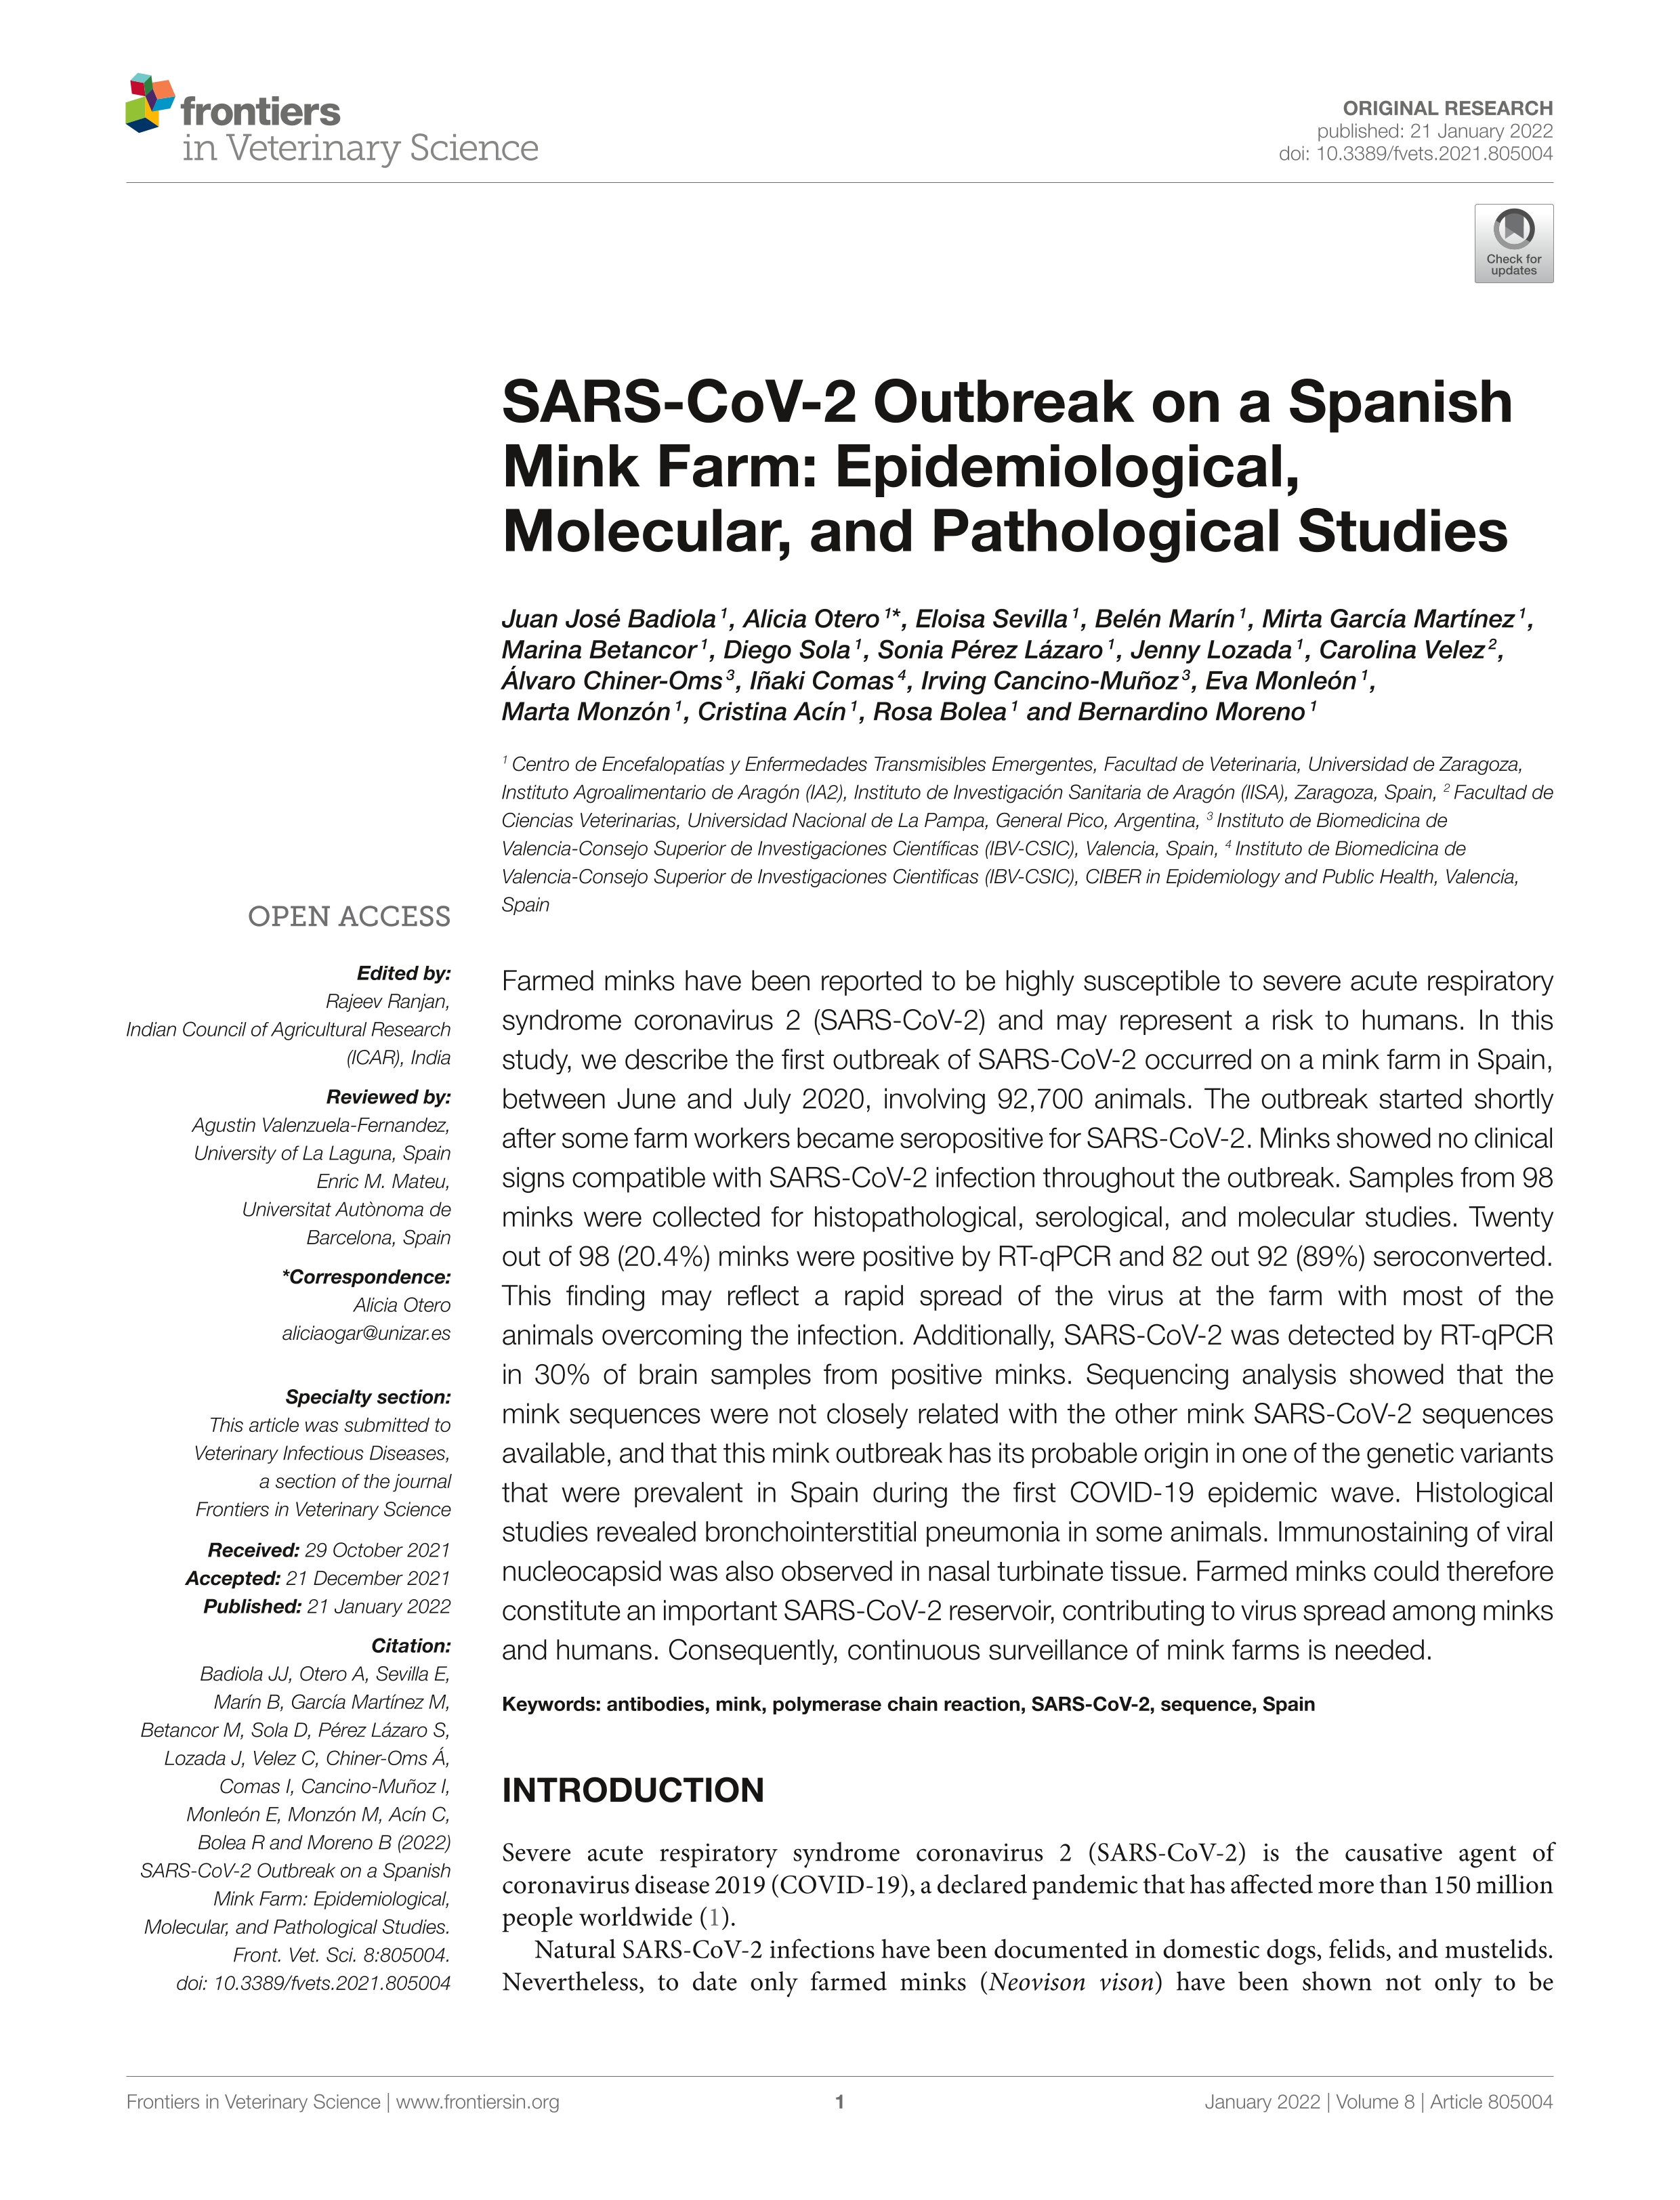 SARS-CoV-2 outbreak on a Spanish mink farm: epidemiological, molecular, and pathological studies